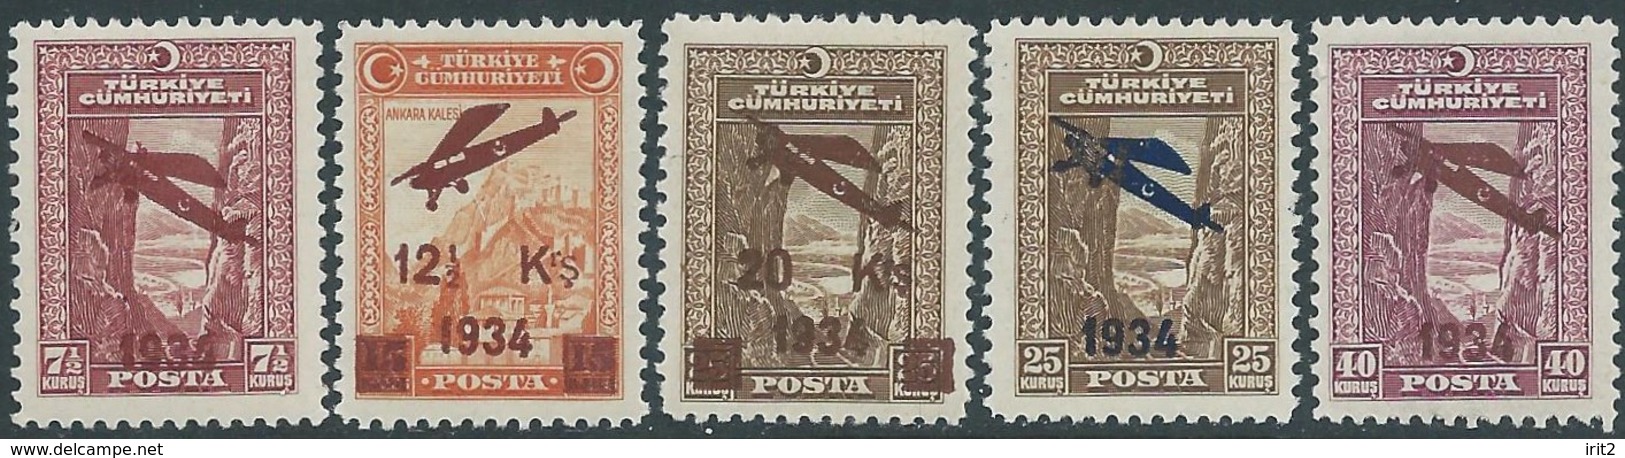 TURCHIA -TURKEY-TURKISH - 1934  Air Mail - 1934-39 Sandjak Alexandrette & Hatay